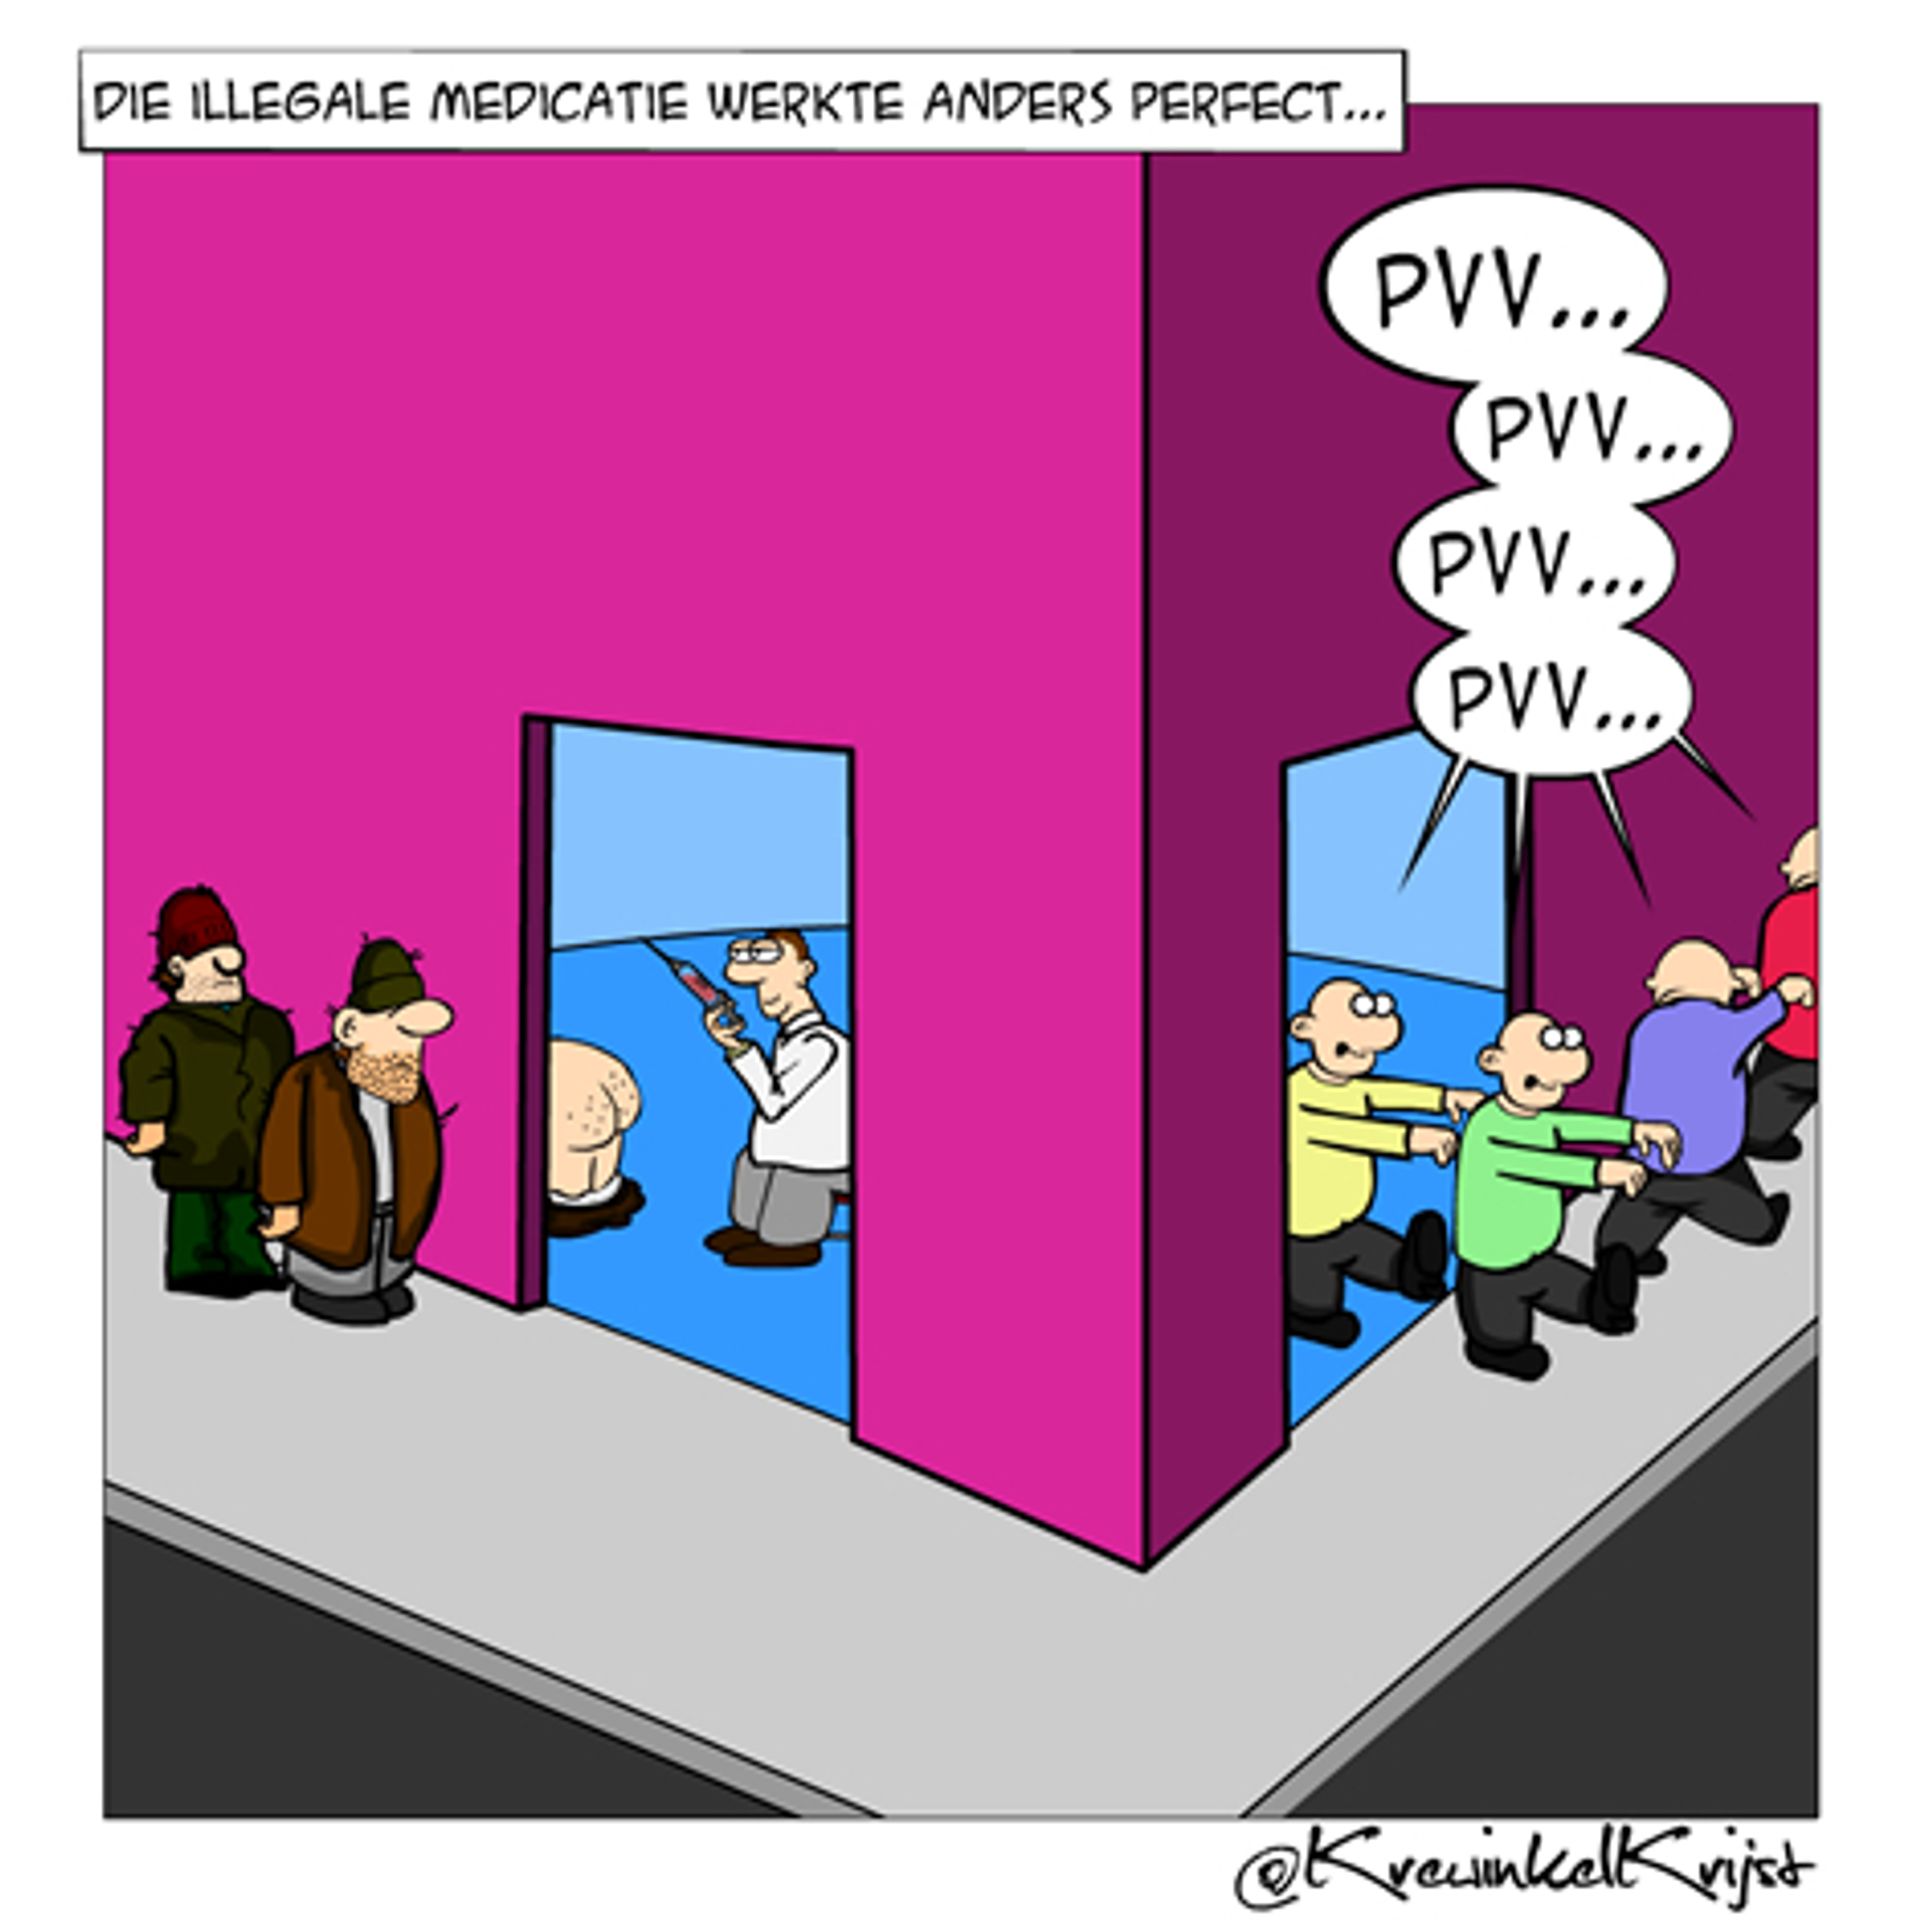 RTEmagicC_PVV_IllegaleMedicijnen_cartoon_KrewinkelKrijst.jpg.jpg